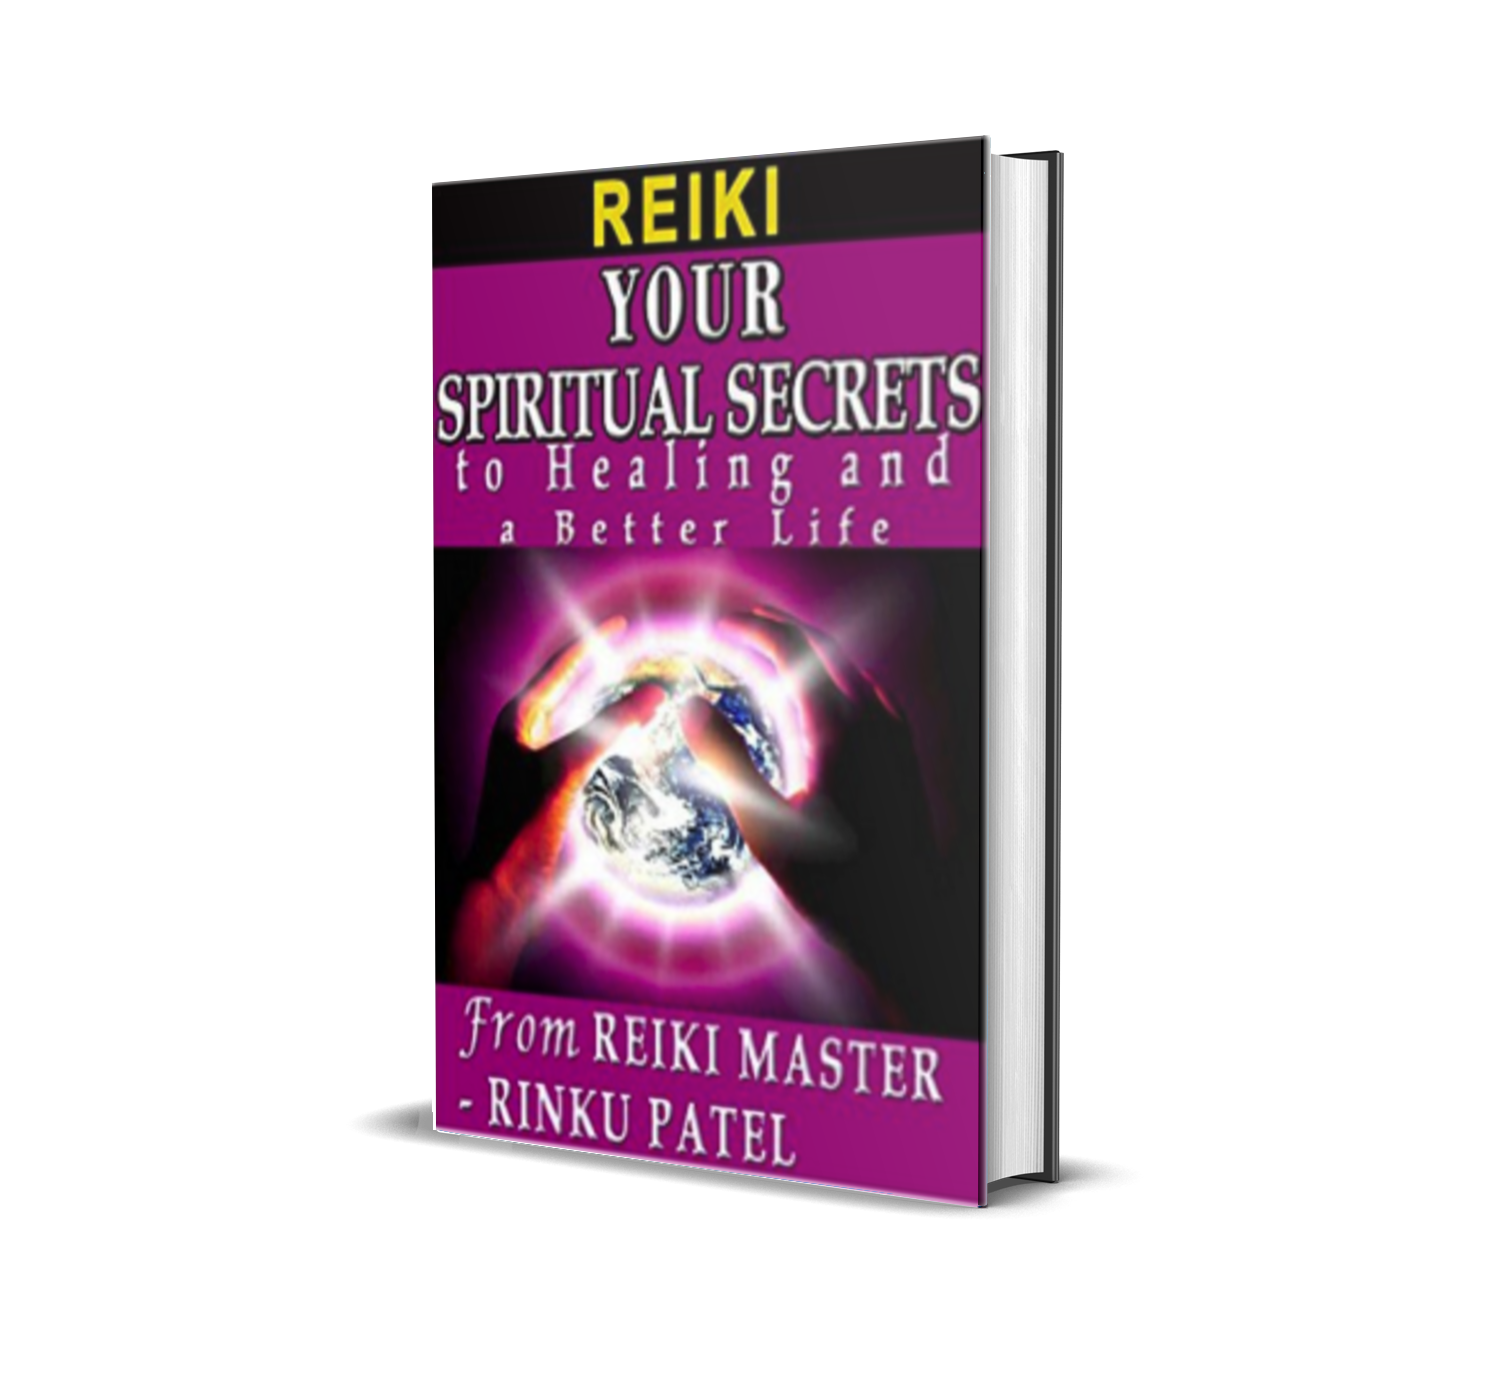 Reiki Your Spiritual Secrets to Healing and a Better Life